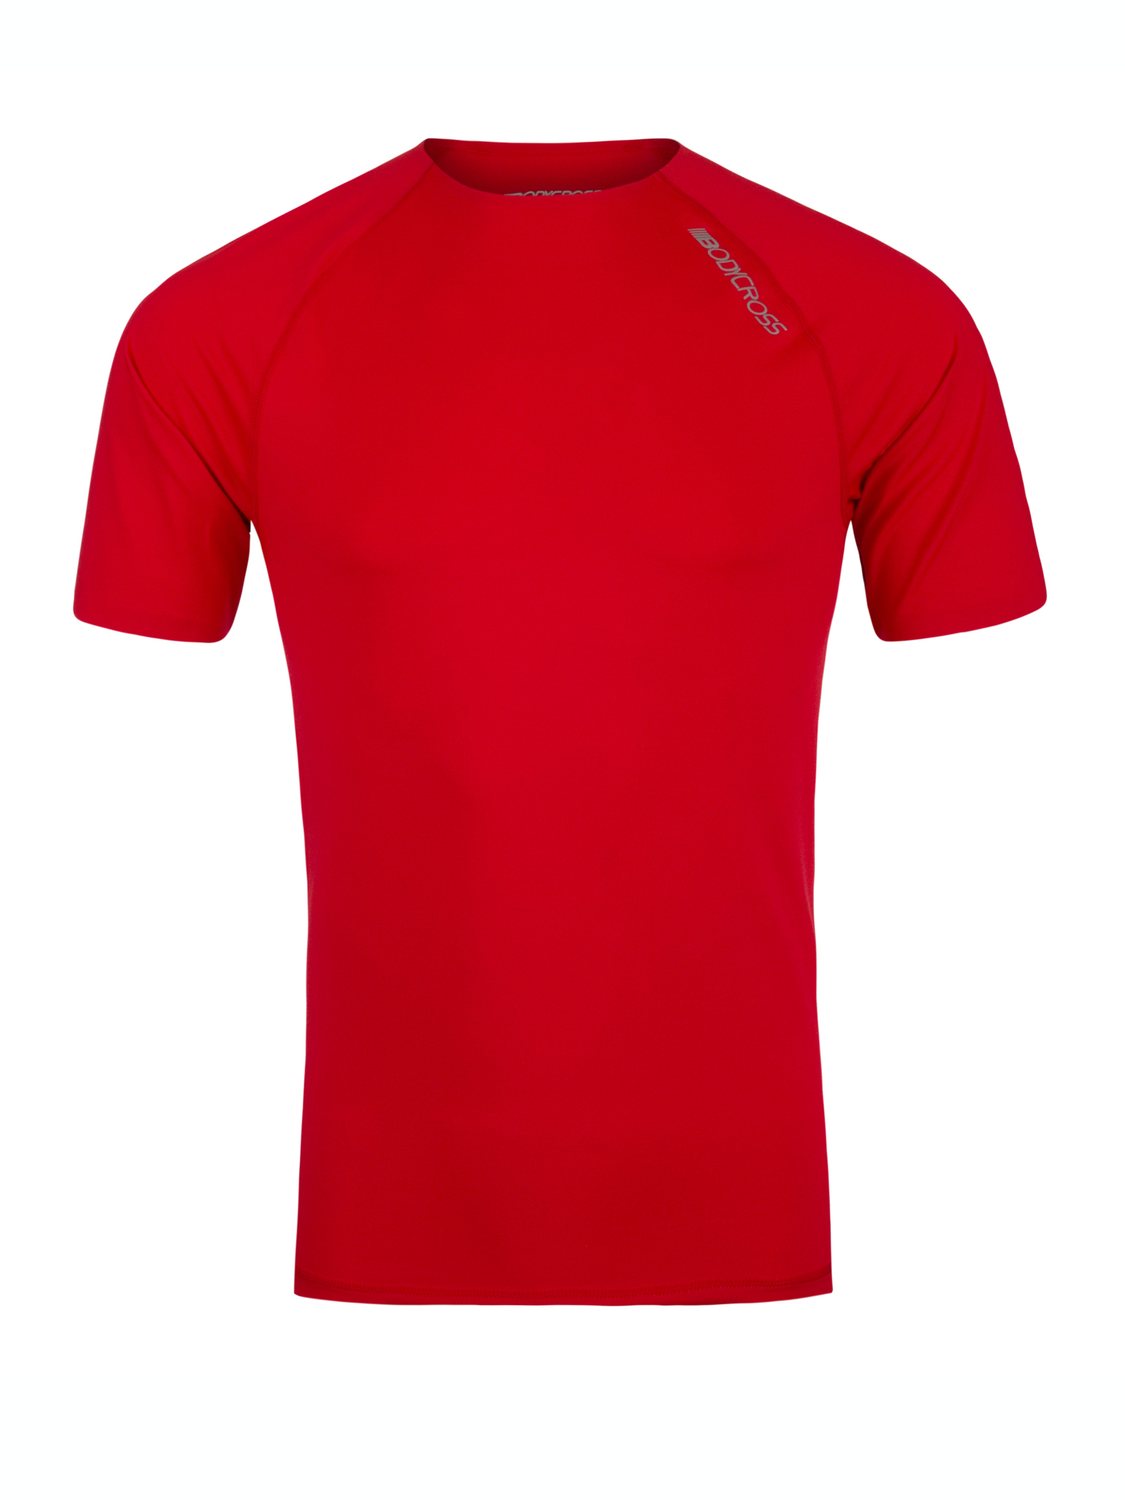 T-shirt de training homme Jaya rouge